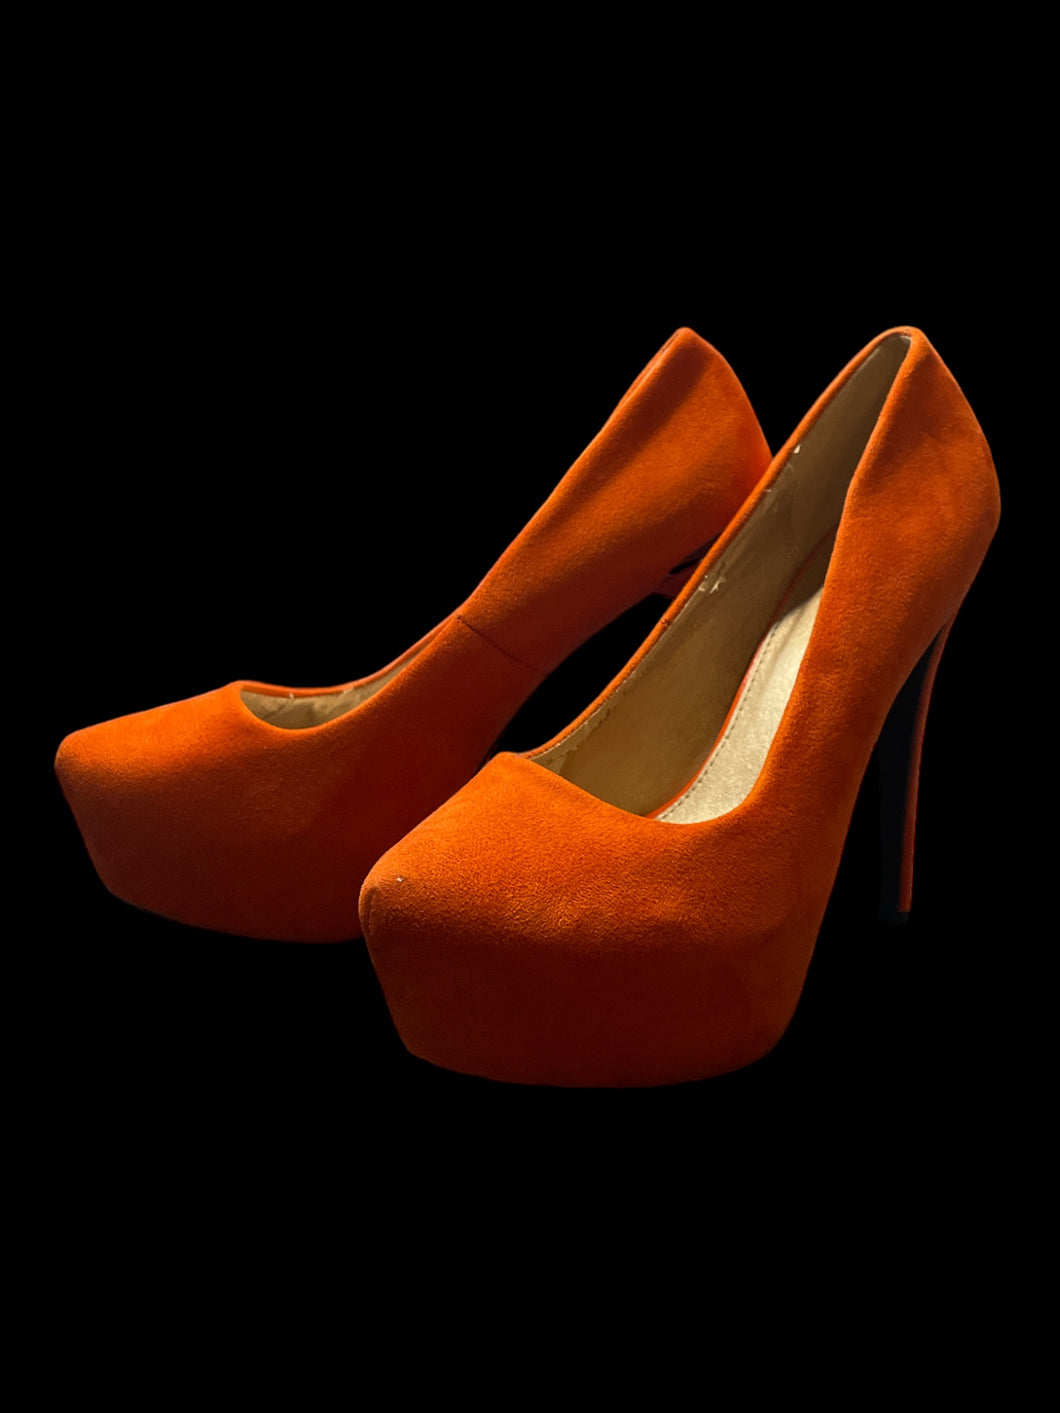 10 Orange suede-like platform heels w/ gold-like reflective strip